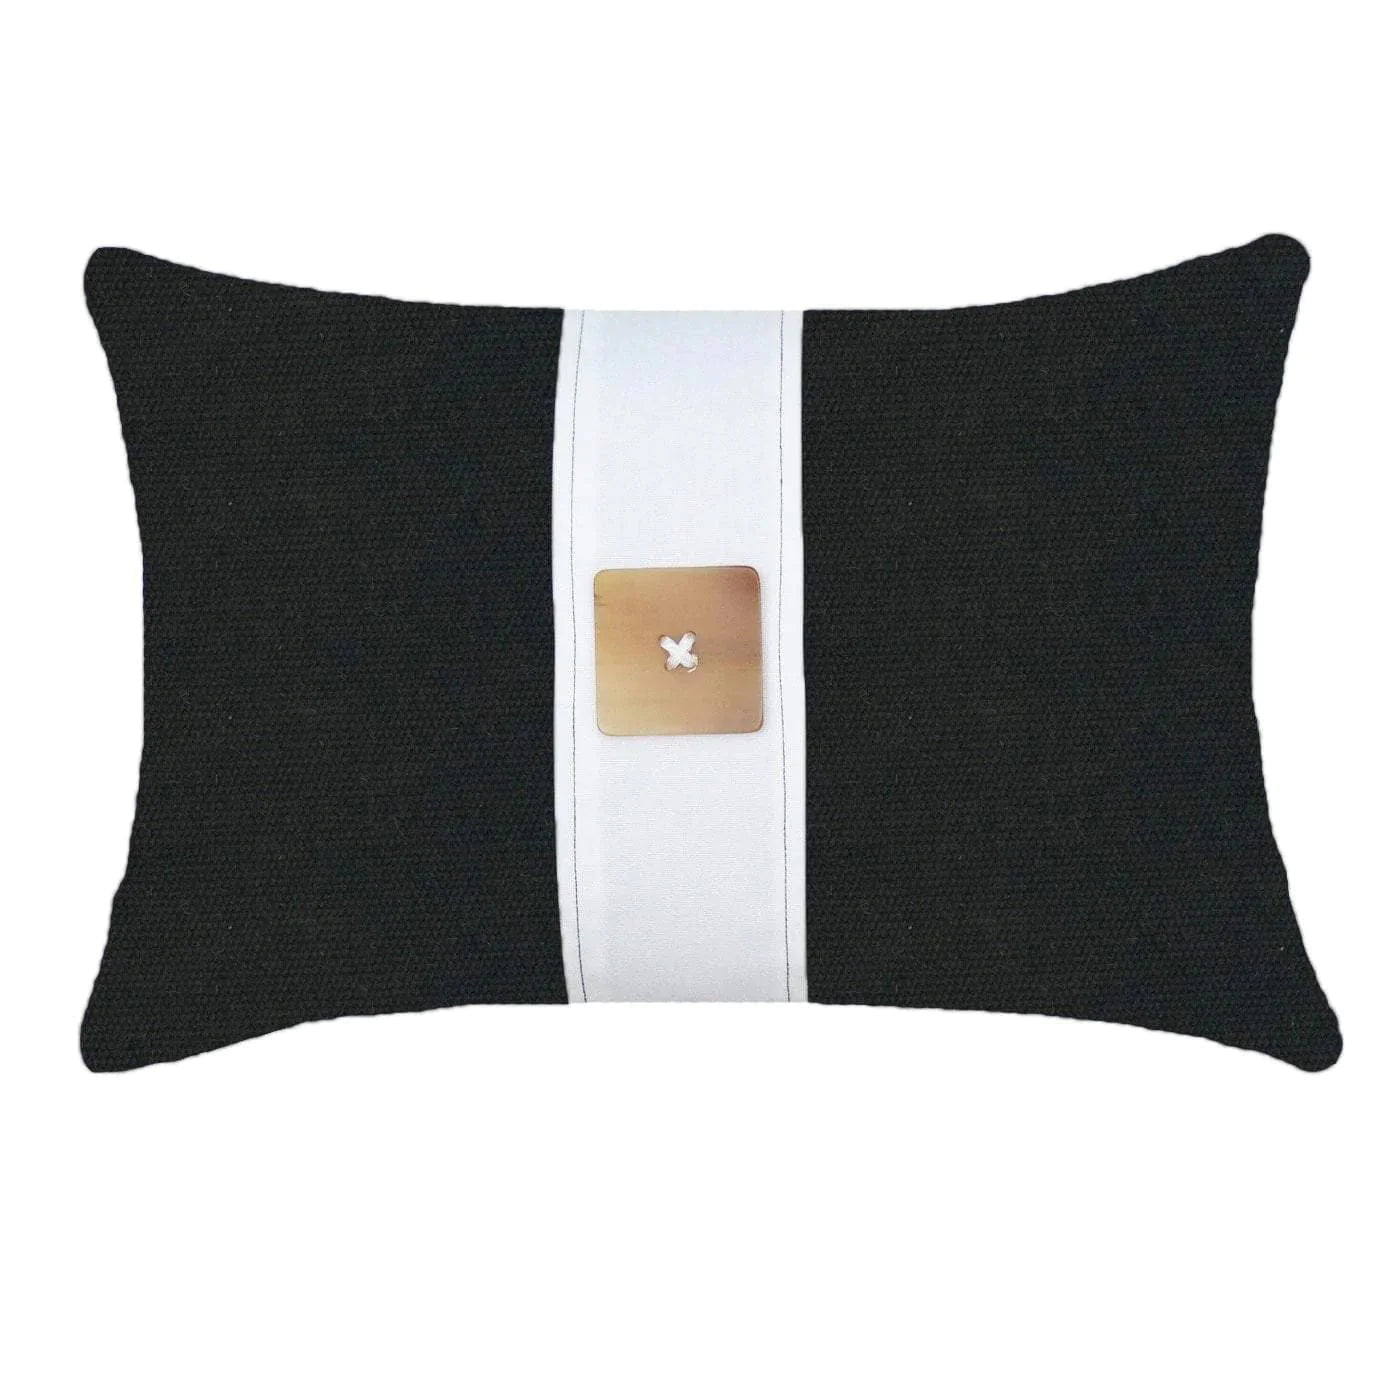 Bandhini Design House Outdoor Black & White Outdoor Horn Button Lumbar Cushion 35 x 53cm